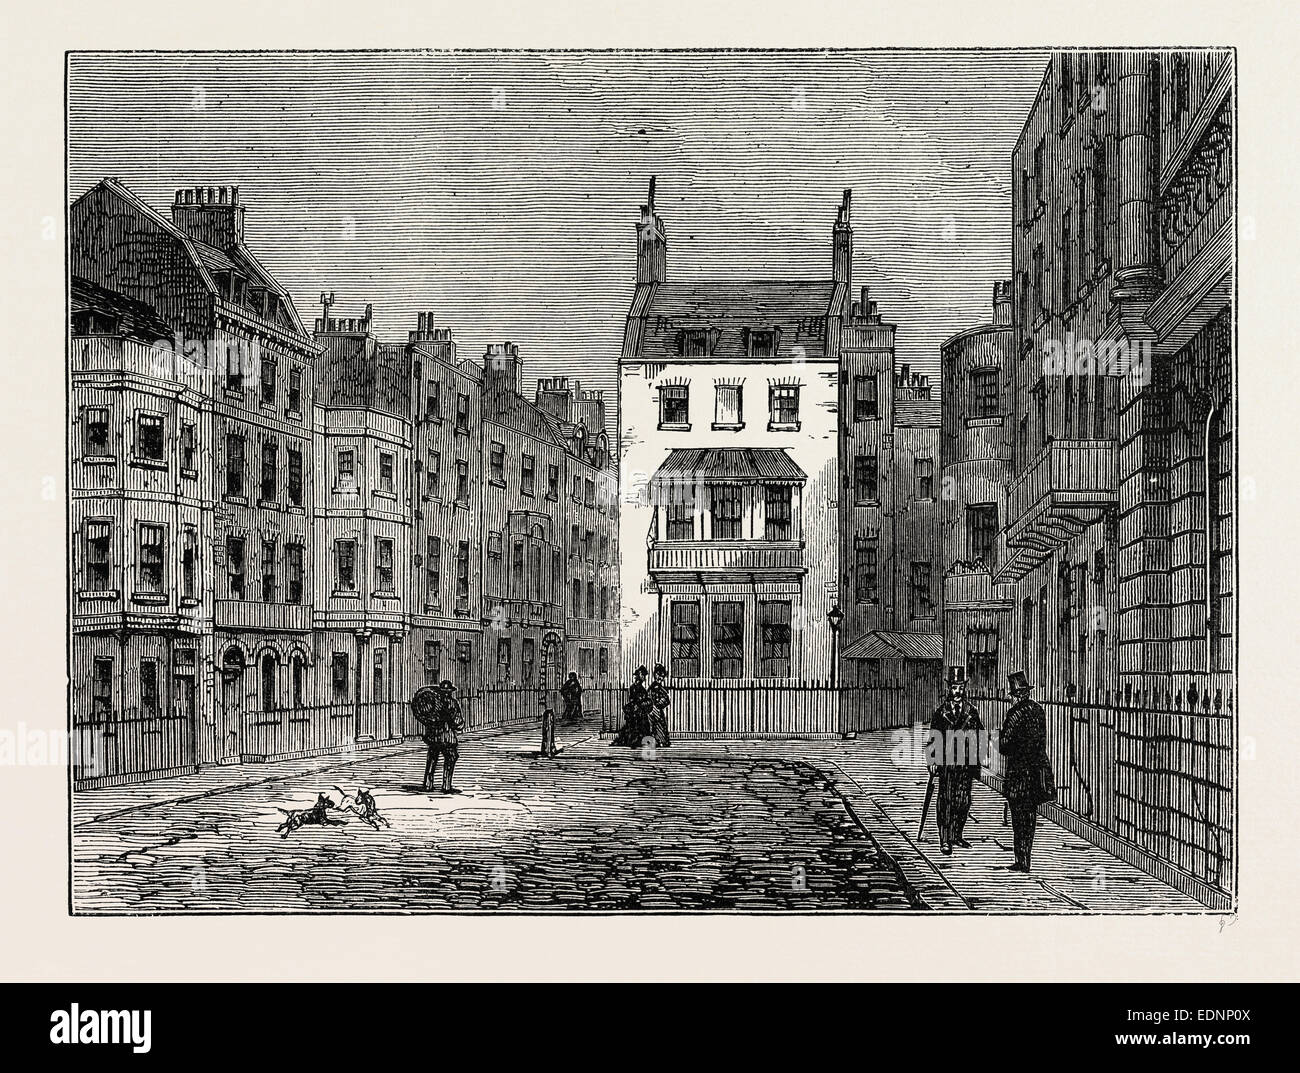 ST. JAMES PLACE. London, UK, 19. Jahrhundert Gravur Stockfoto